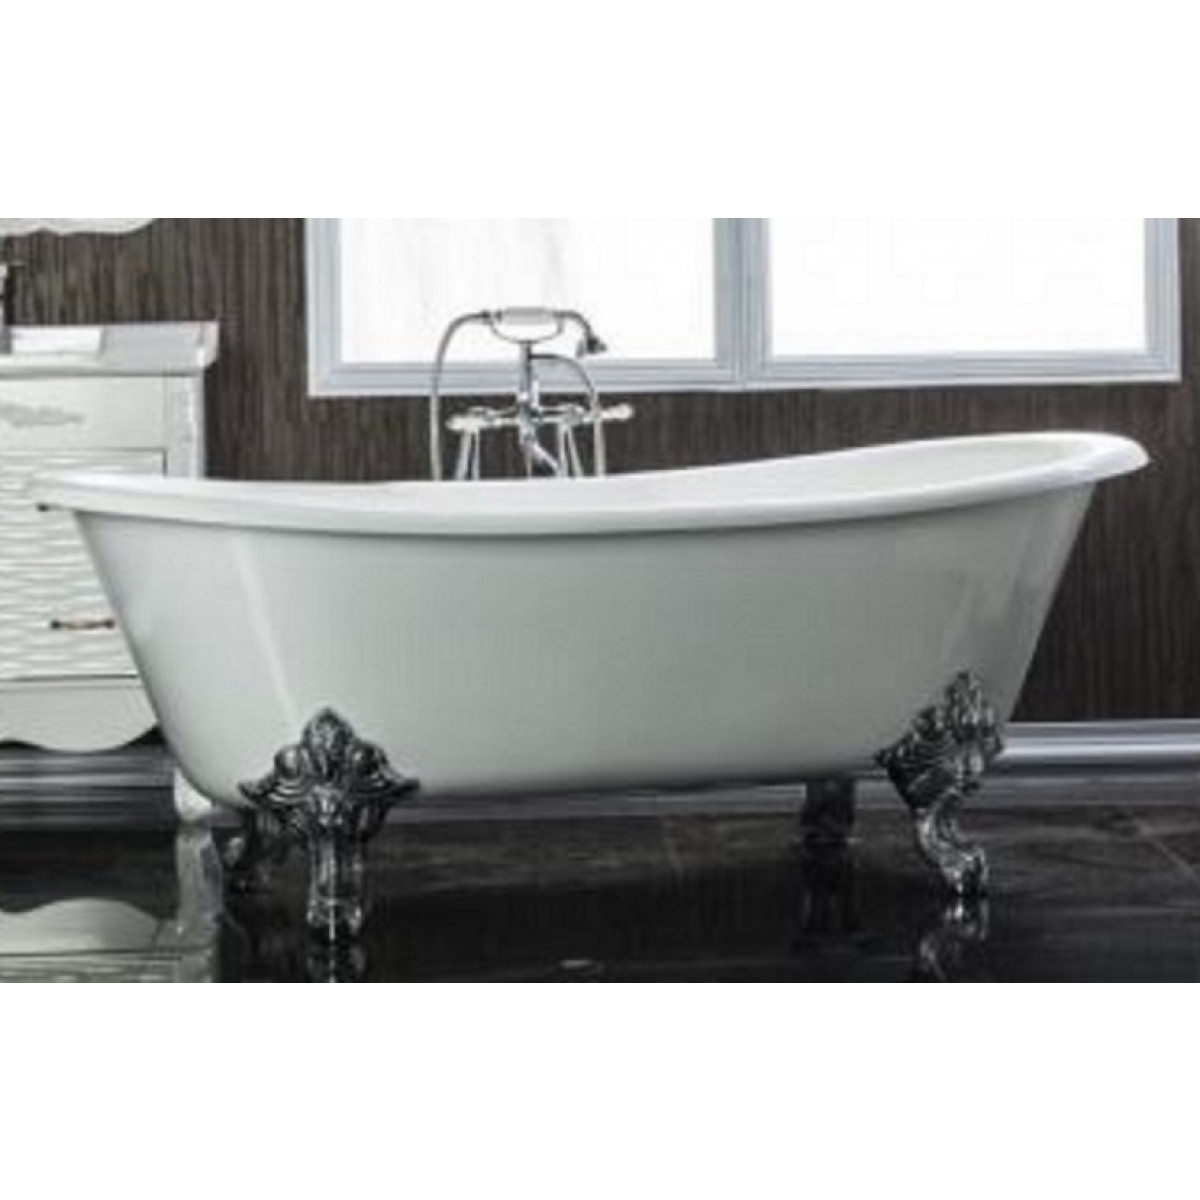 Canterbury CST/CIB/YEOMAN18 1800mm Standard Double Slipper Bath